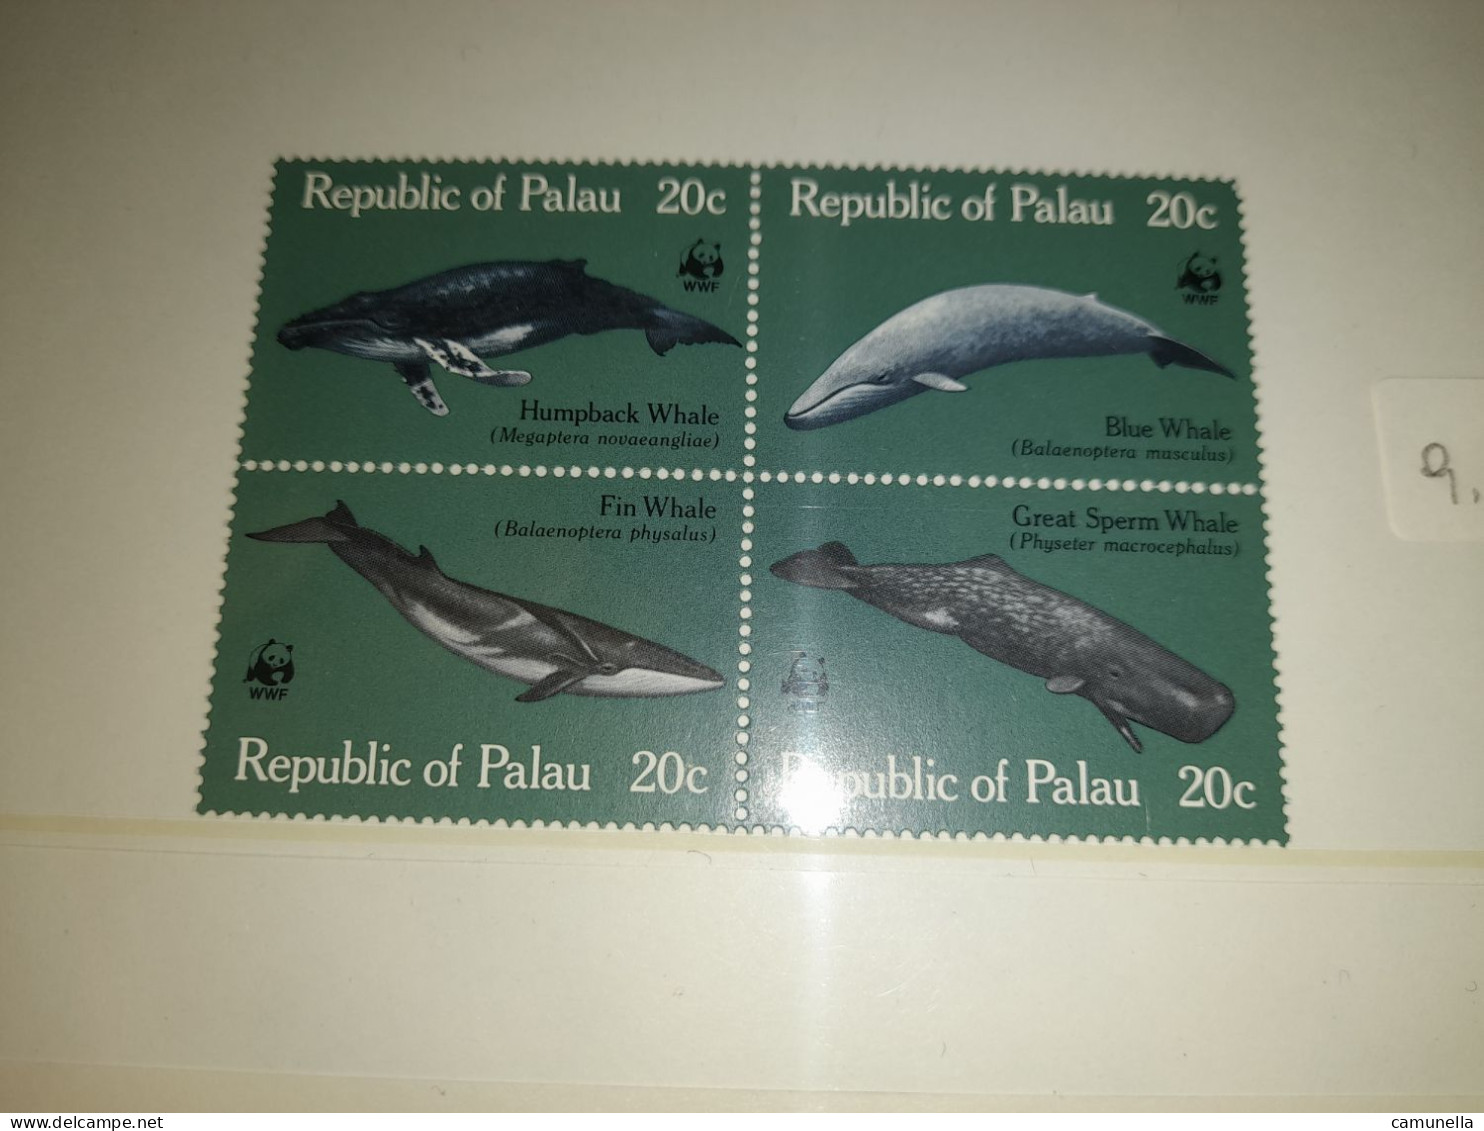 Palau- Foglietto MNH -1989 Environment Protection - Palau